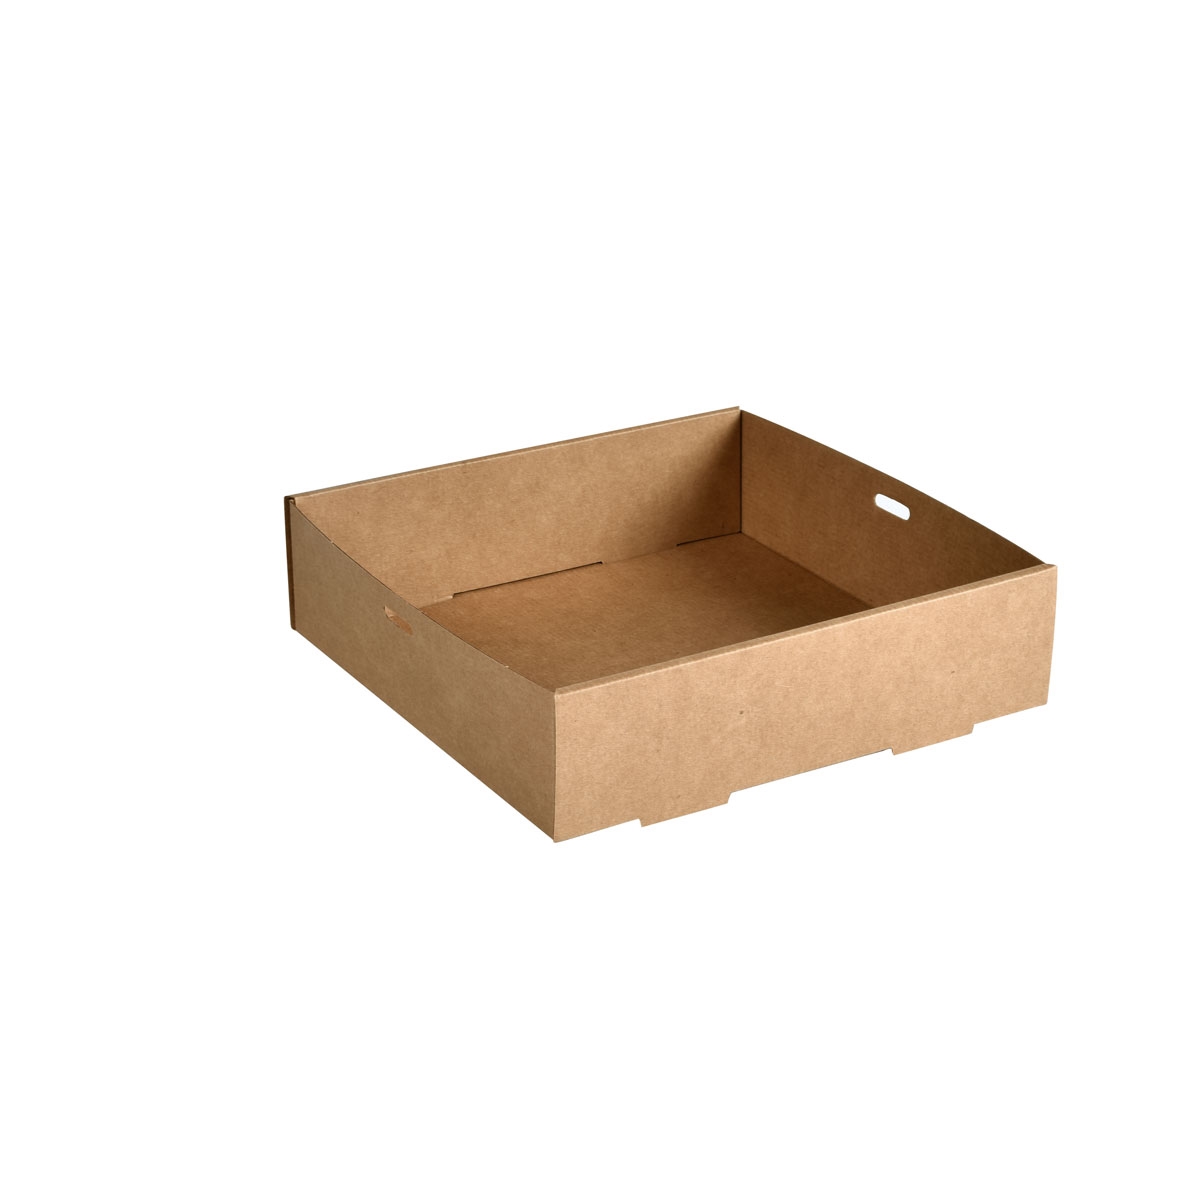 Catering-Tray Cardboard / PLA braun, Small braun